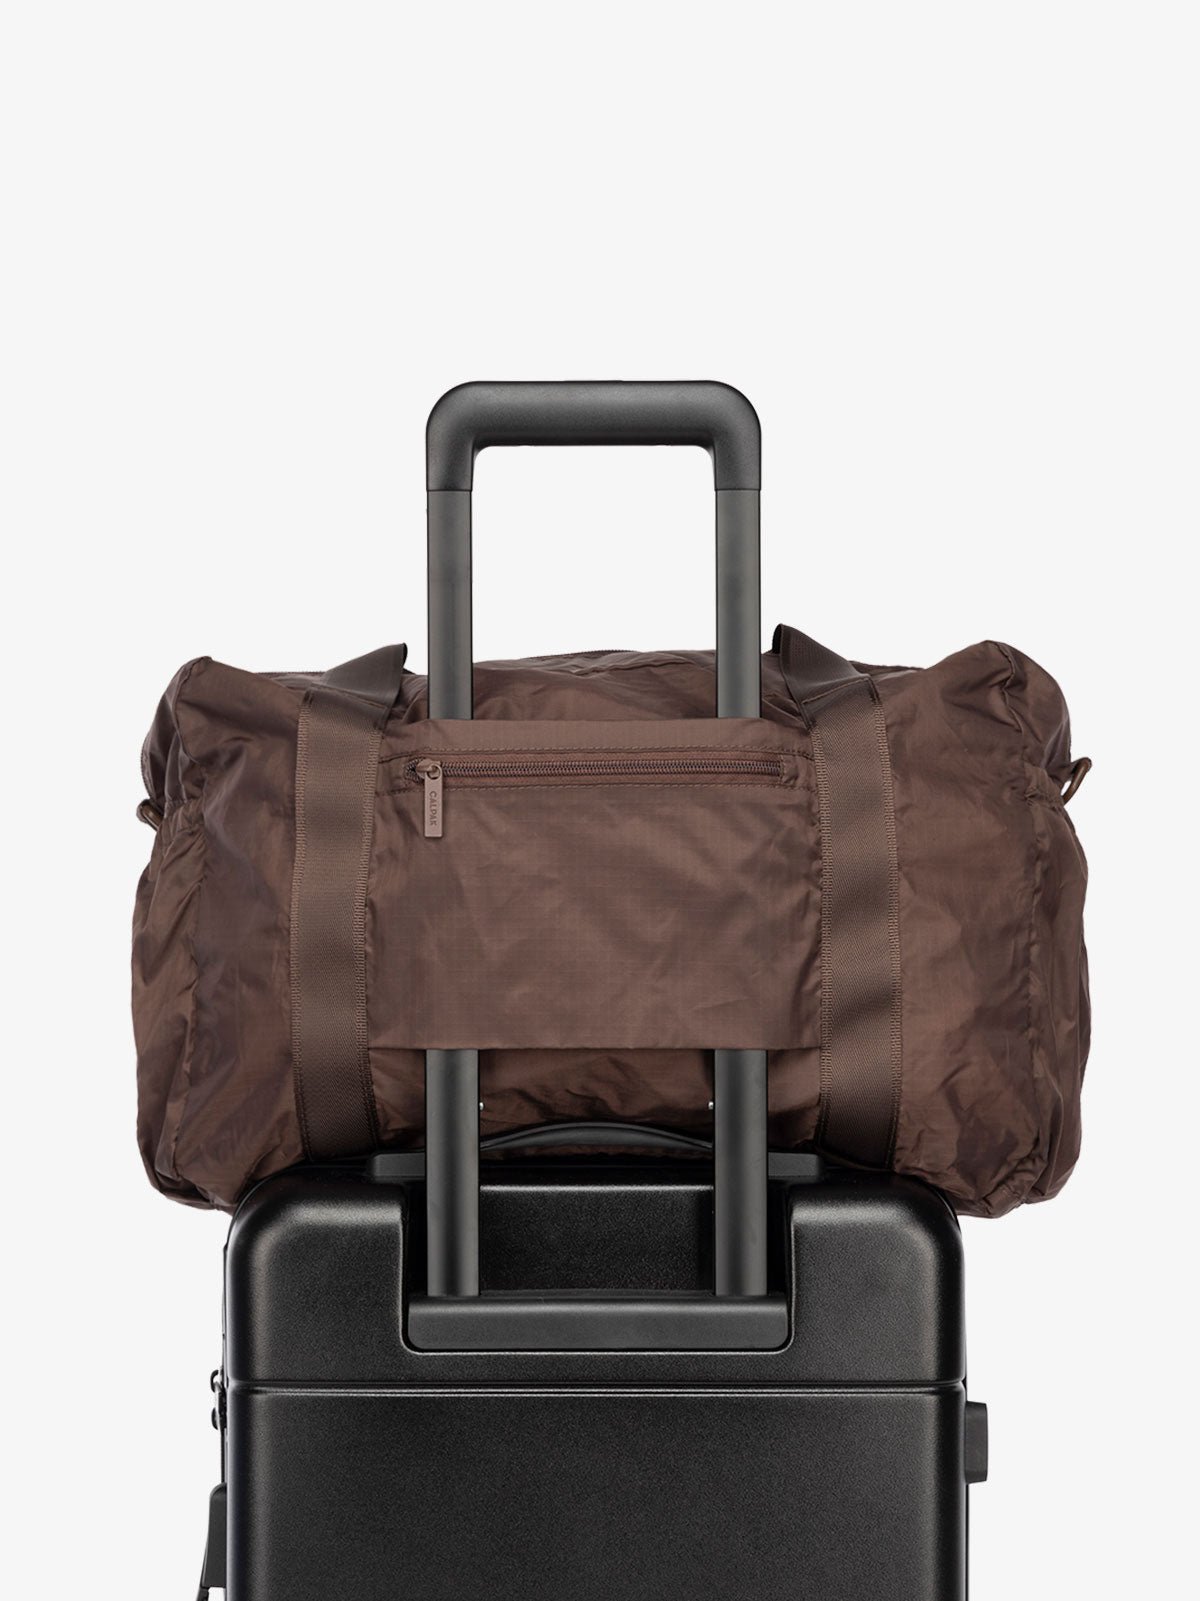 CALPAK Compakt nylon duffle bag with  trolley sleeve in walnut brown